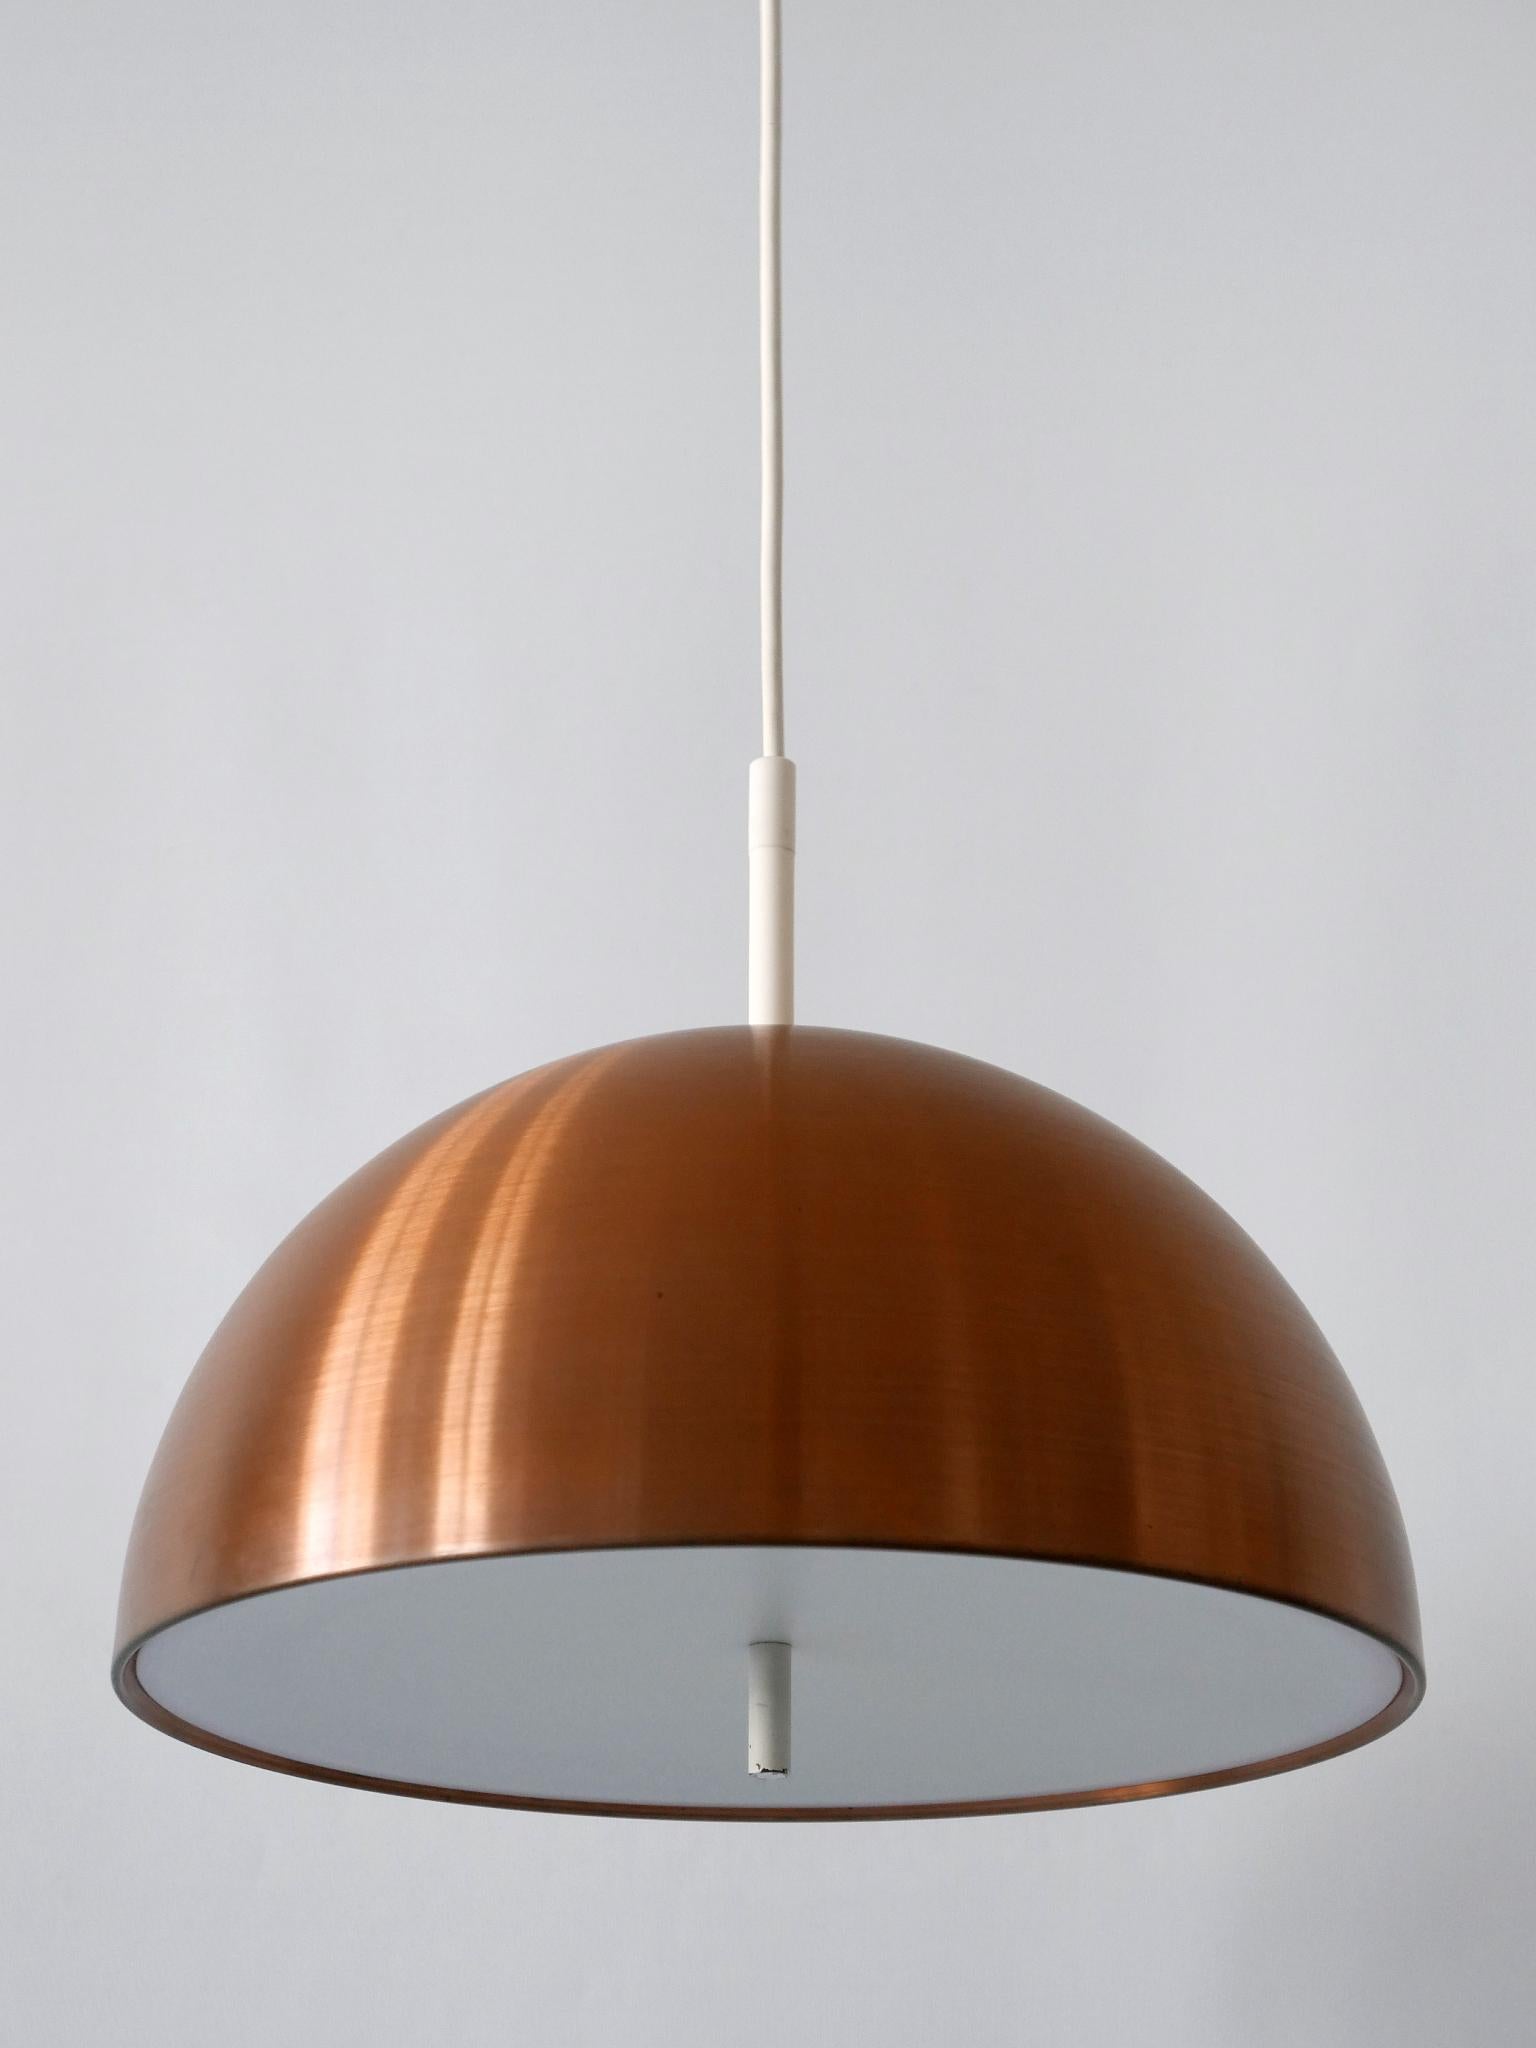 Elegant Mid-Century Modern Copper Pendant Lamp by Staff & Schwarz Germany, 1960s For Sale 7